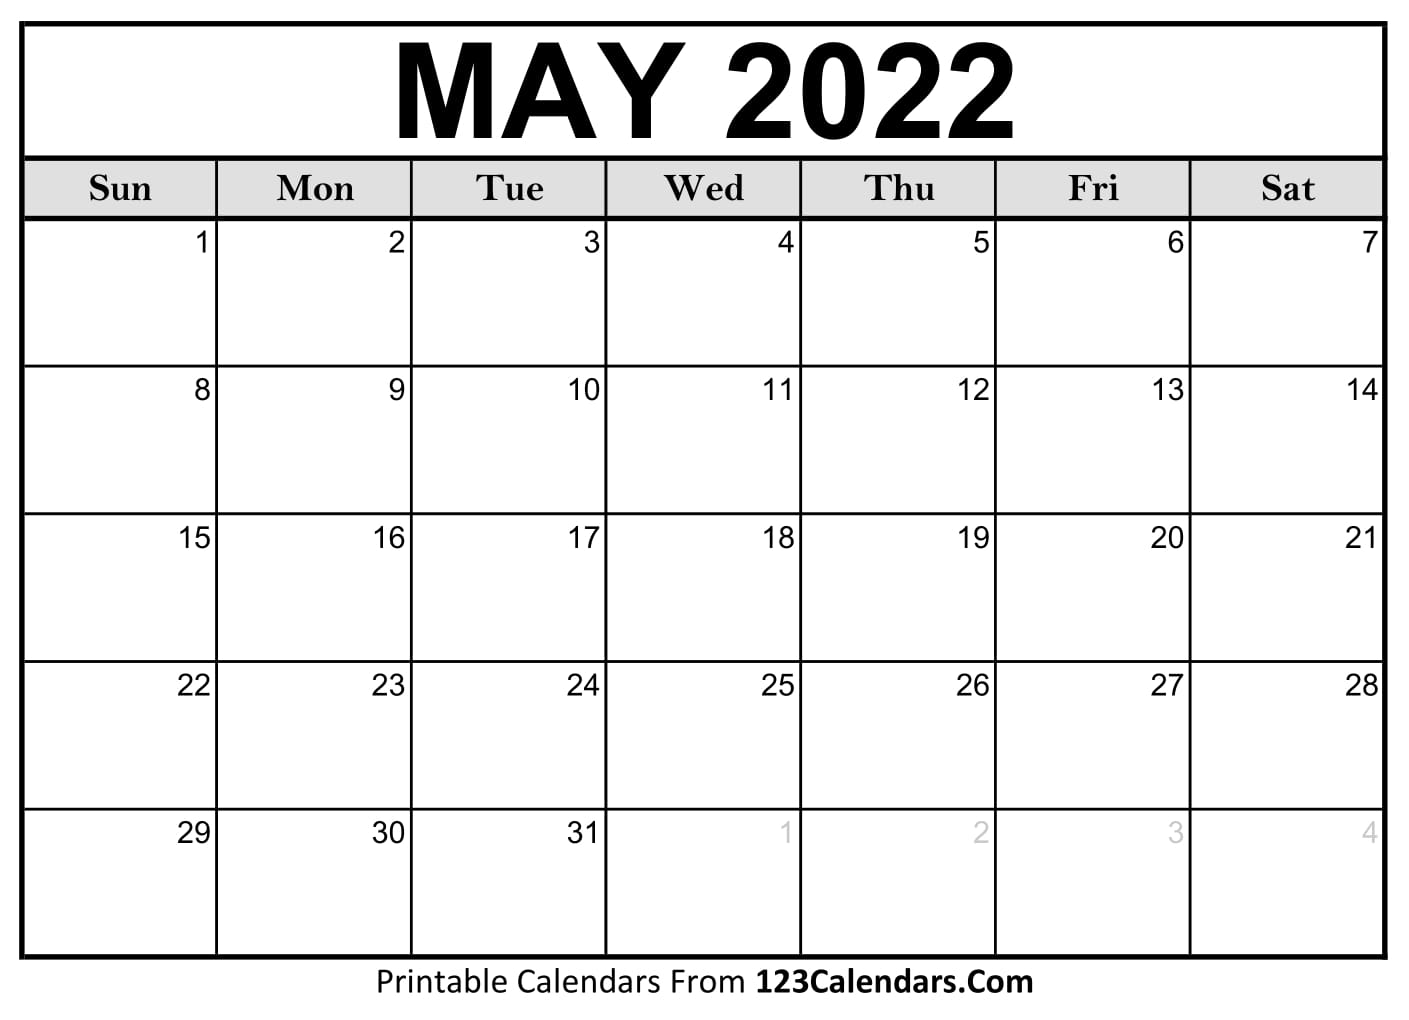 Blank Calendar May 2022 Template.Printable May 2022 Calendar Templates 123calendars Com